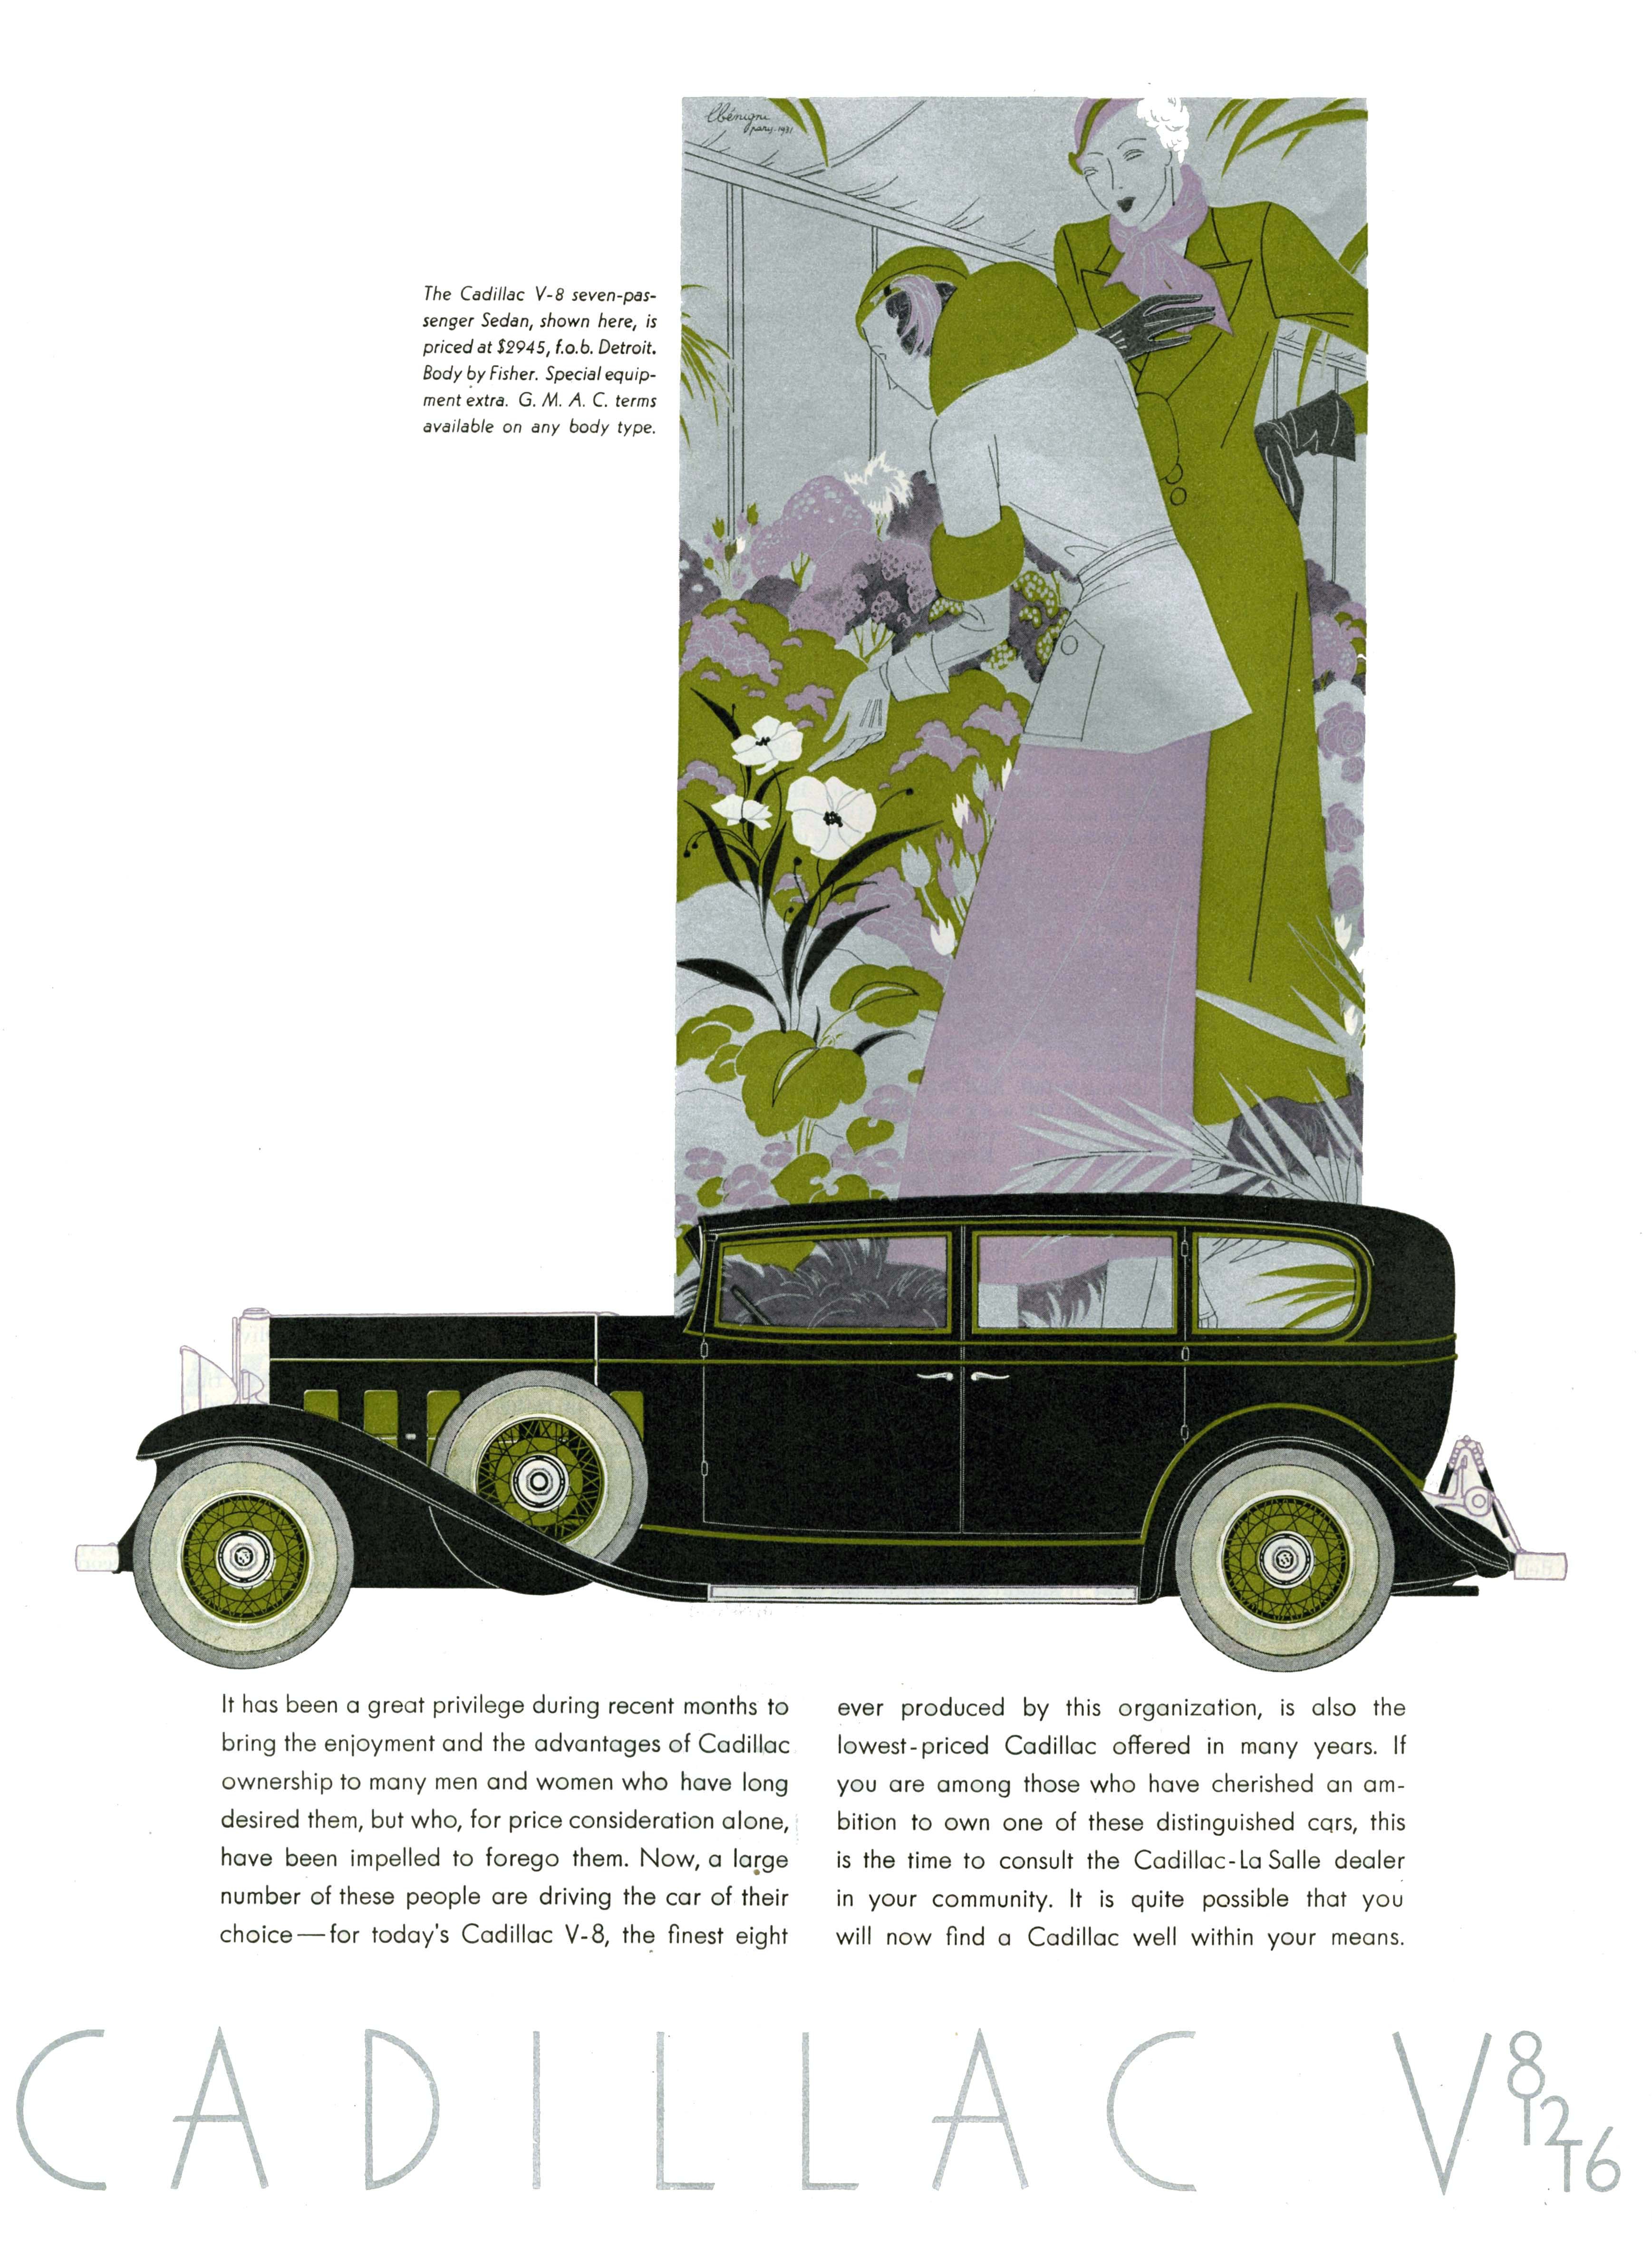 Cadillac V-8 Ad (November, 1931): Seven-Passenger Sedan, with coachwork by Fisher - Illustrated by Leon Benigni